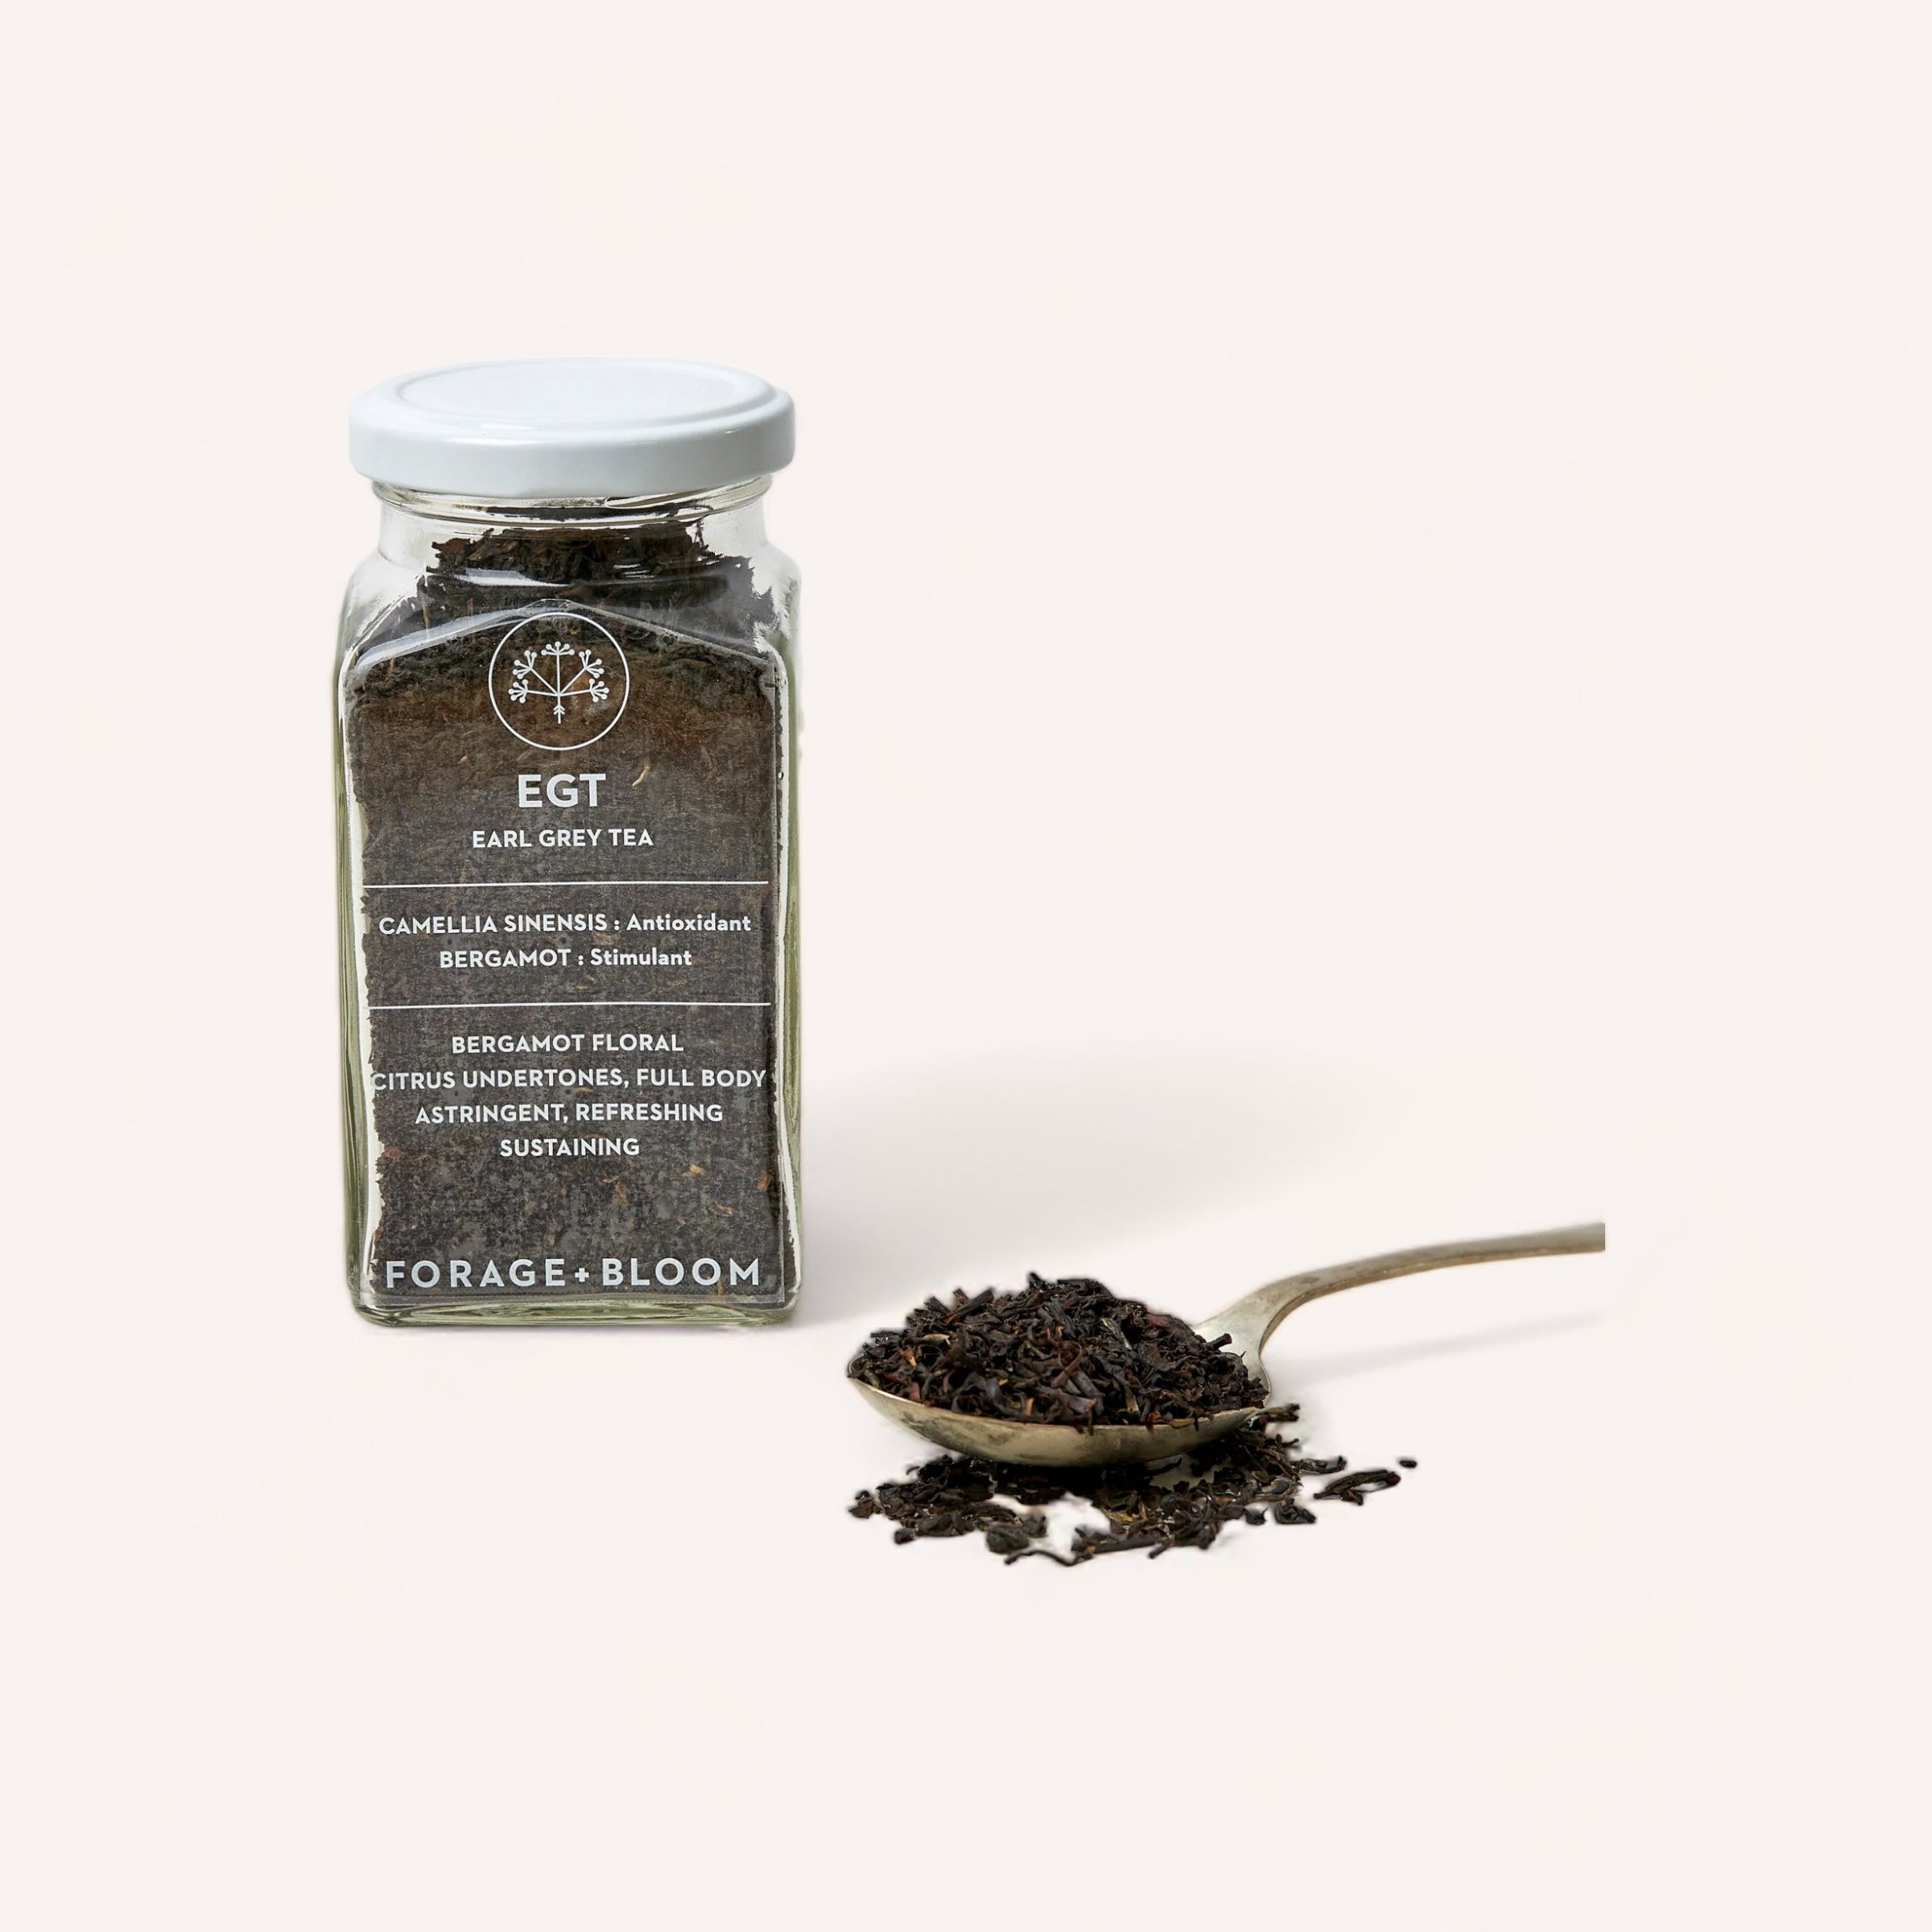 A jar of Forage + Bloom Earl Grey tea, infused with bergamot, alongside a teaspoon of loose tea leaves on a white background.